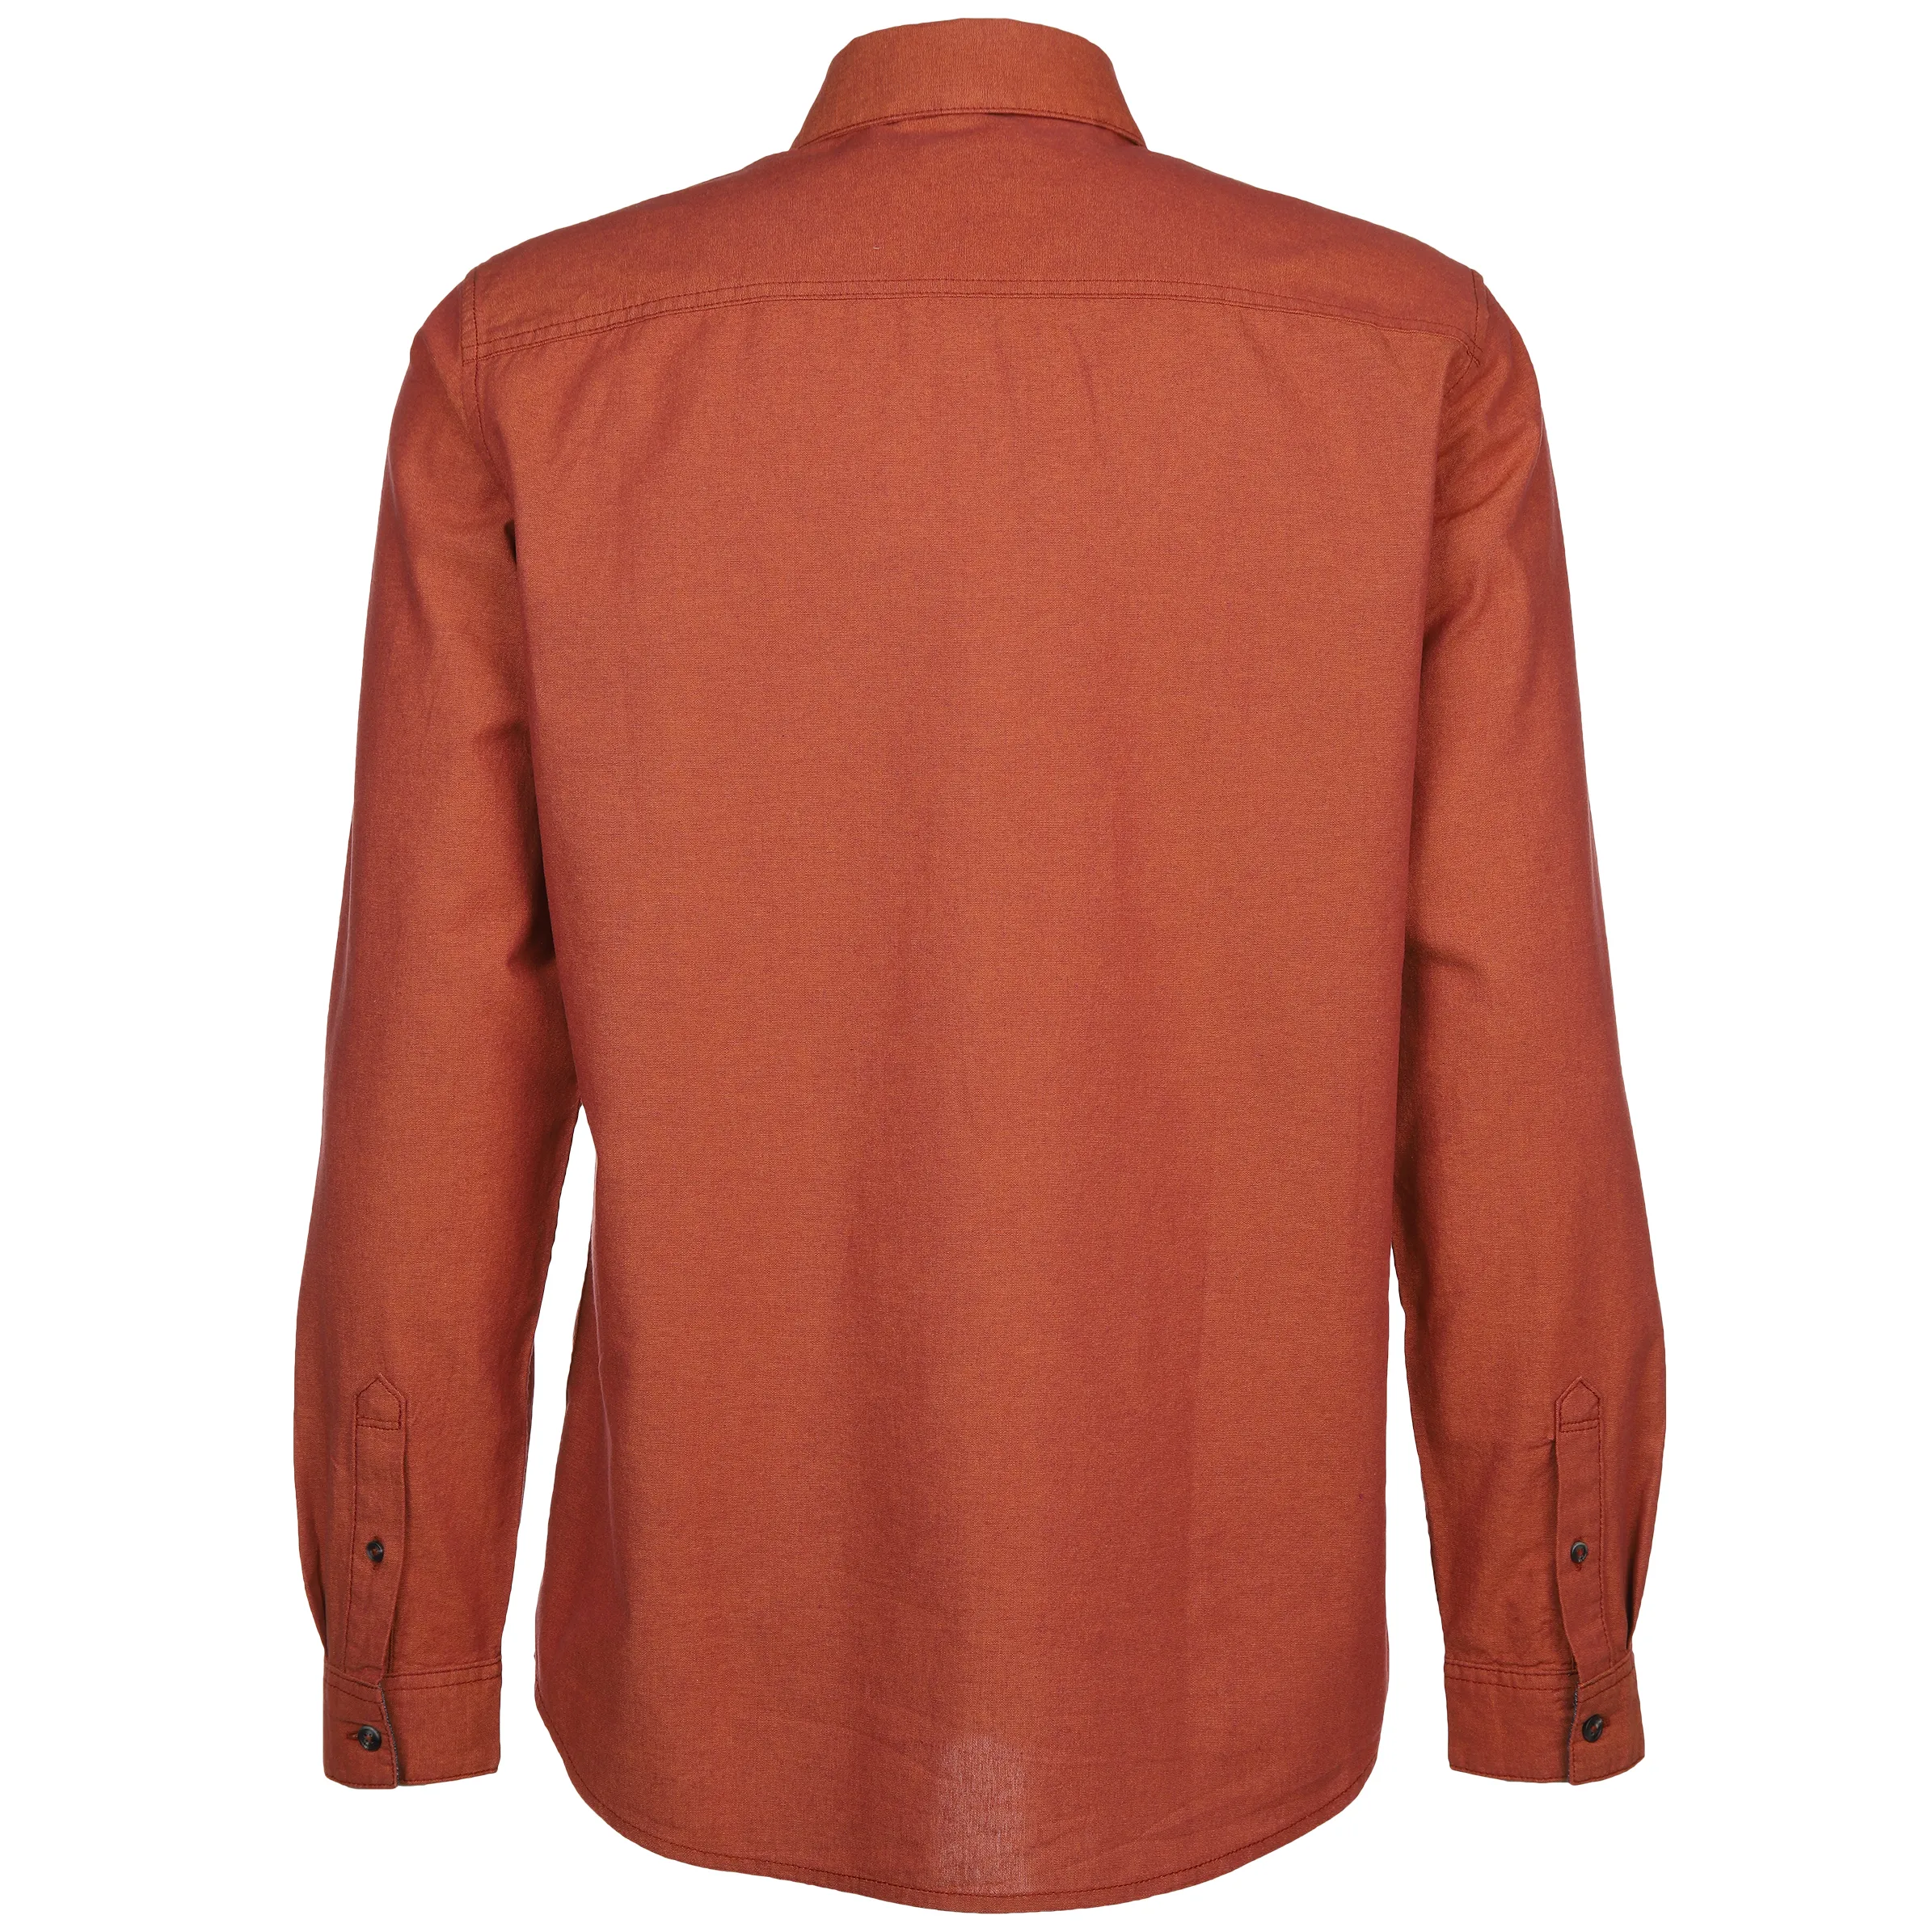 Tom Tailor 1037450 chambray shirt Orange 884279 32316 2